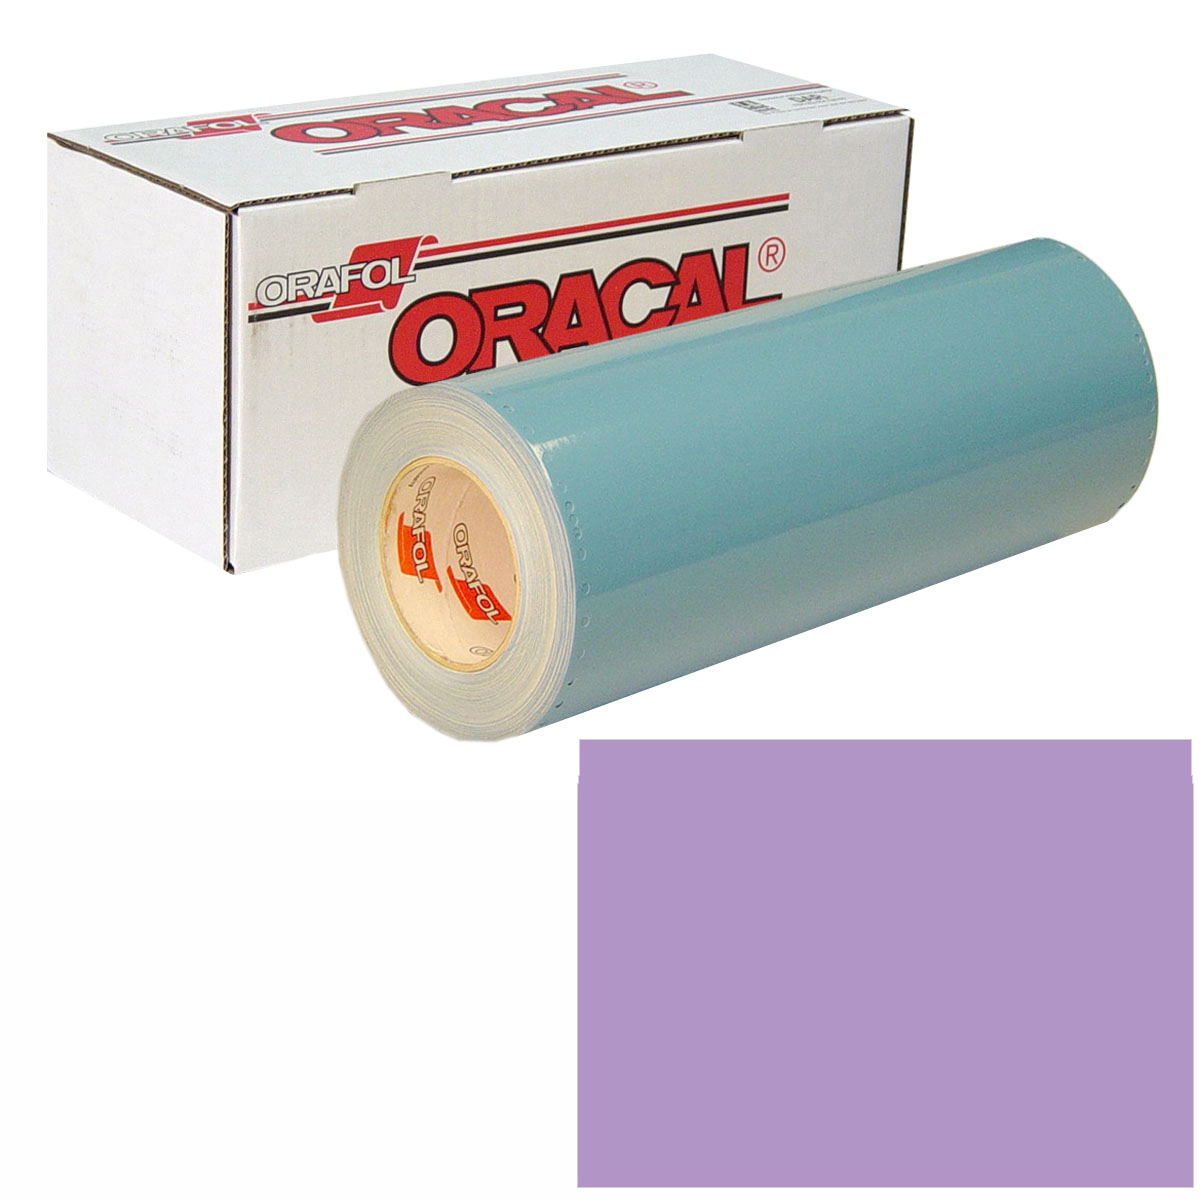 ORACAL 751 Unp 48in X 10yd 042 Lilac